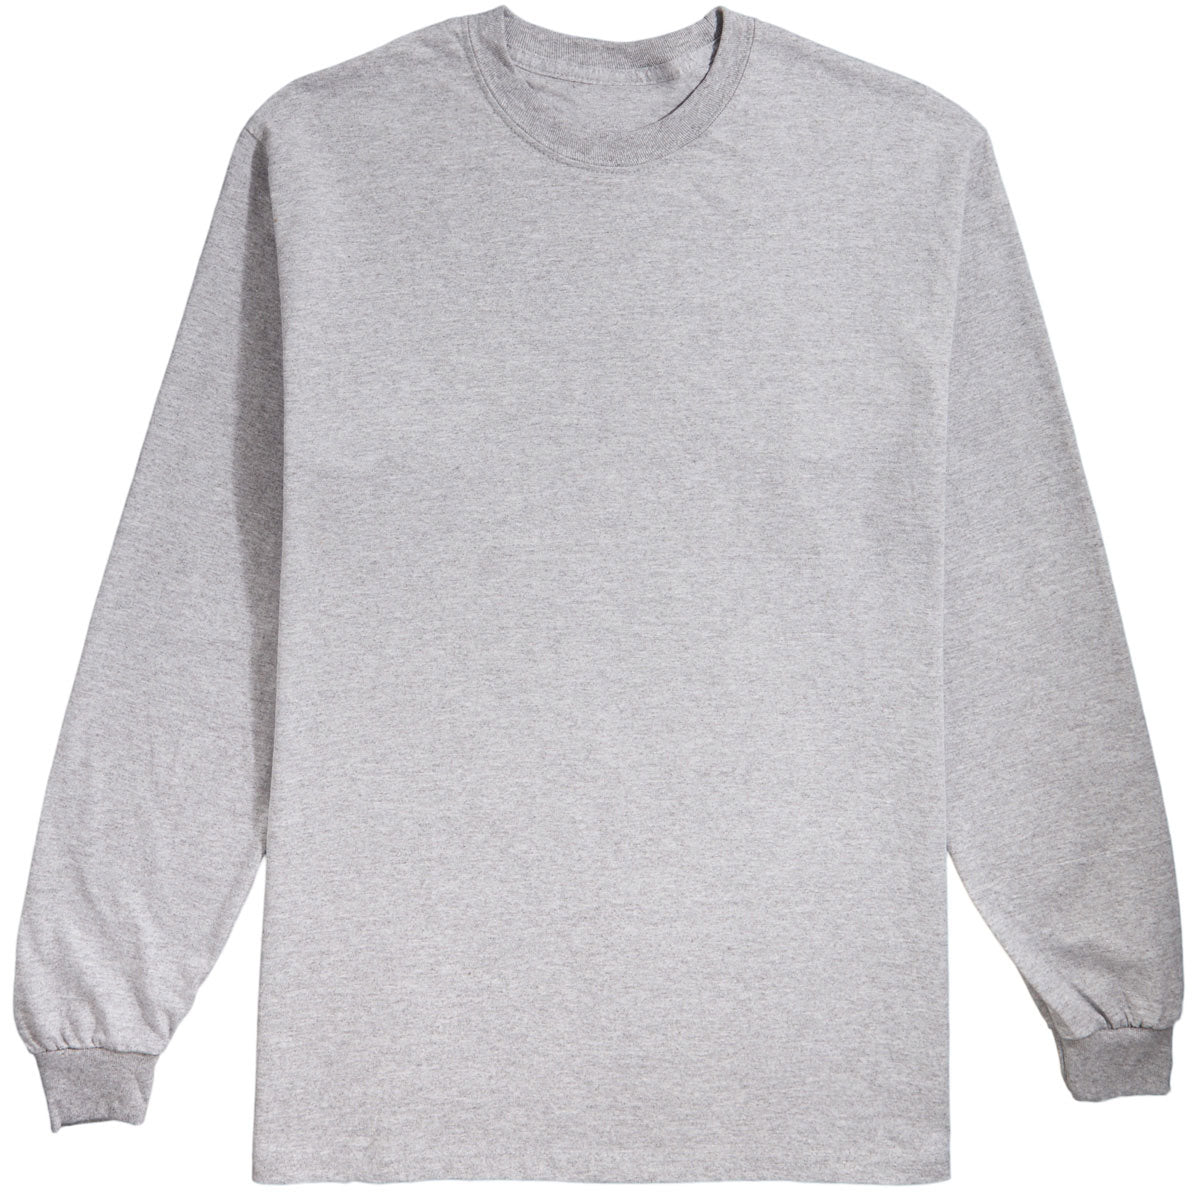 Habitat Bear Long Sleeve T-Shirt  - Heather Grey - XL image 1